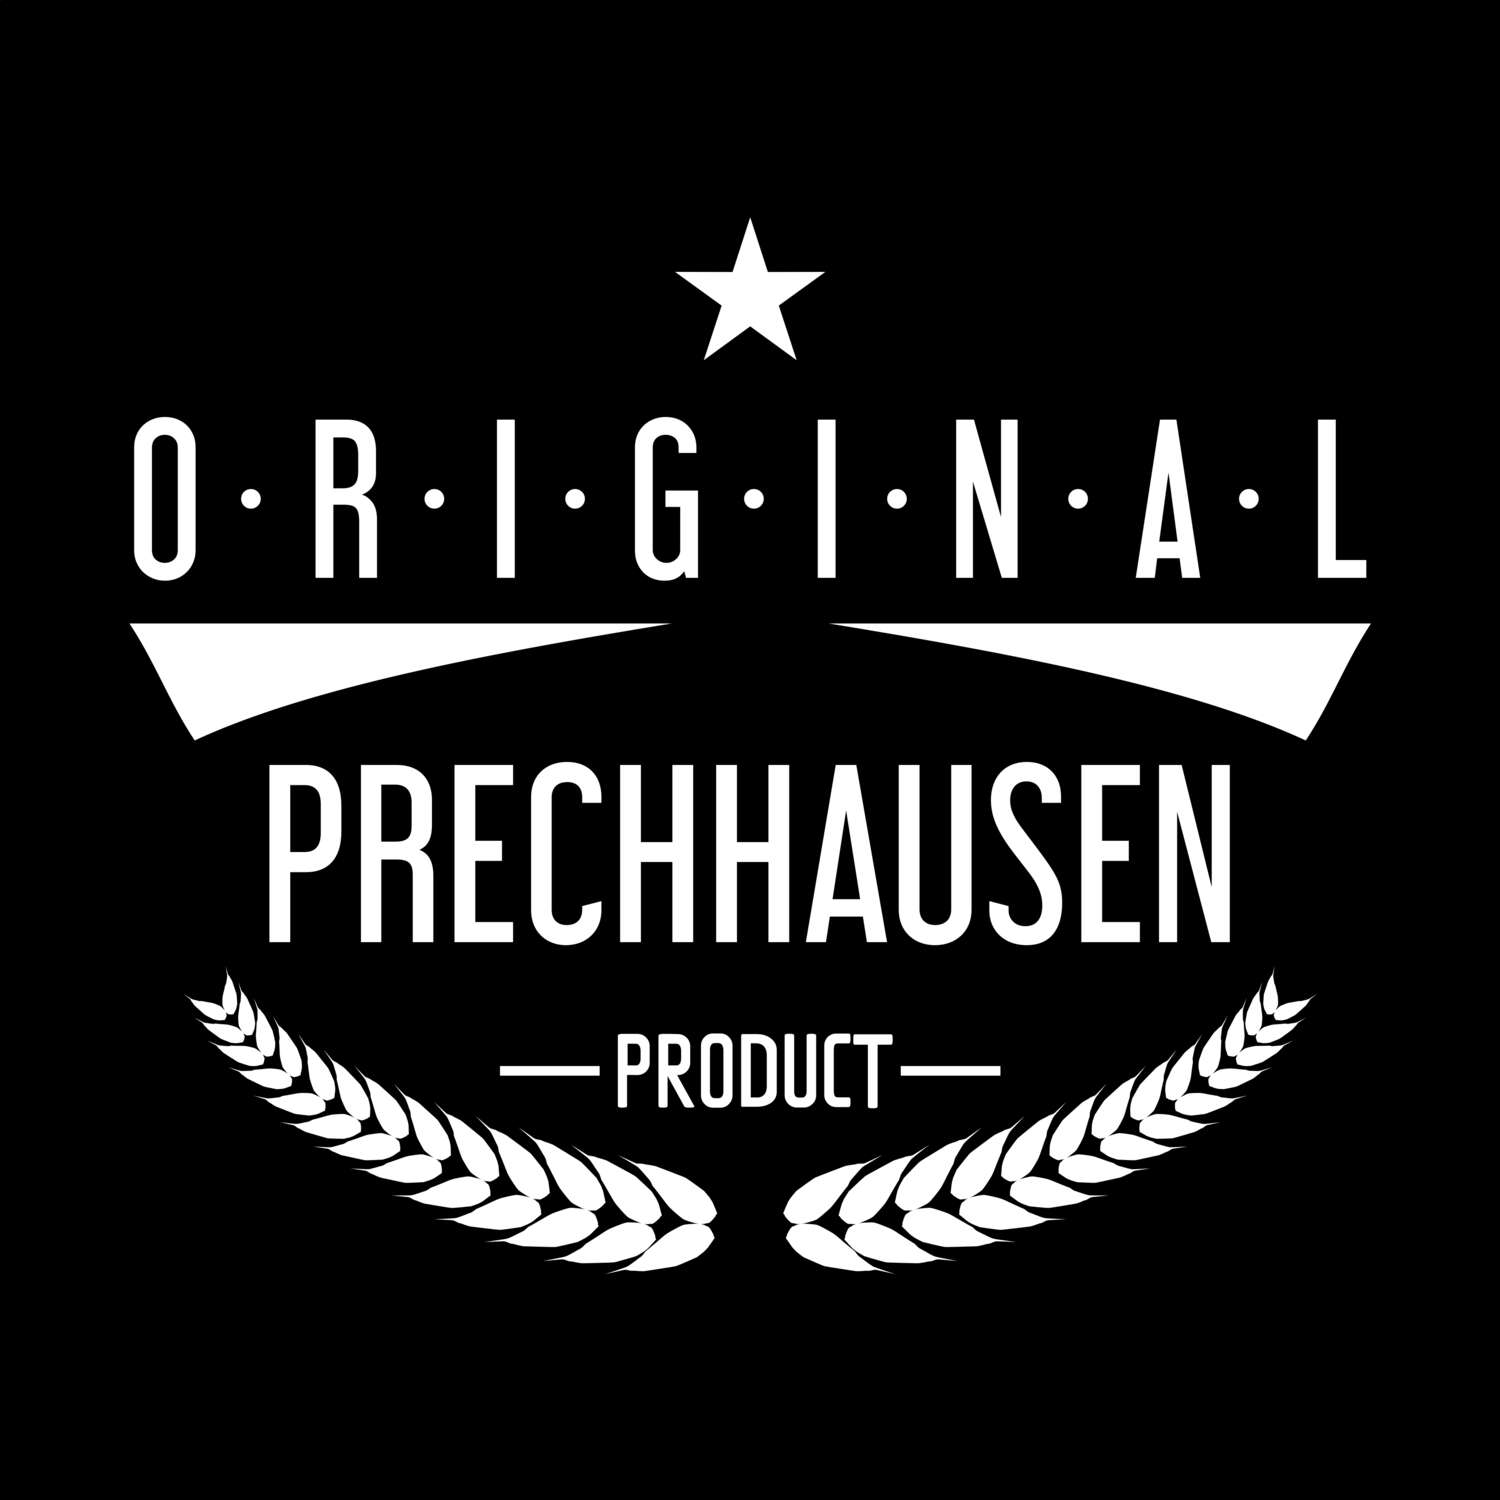 Prechhausen T-Shirt »Original Product«